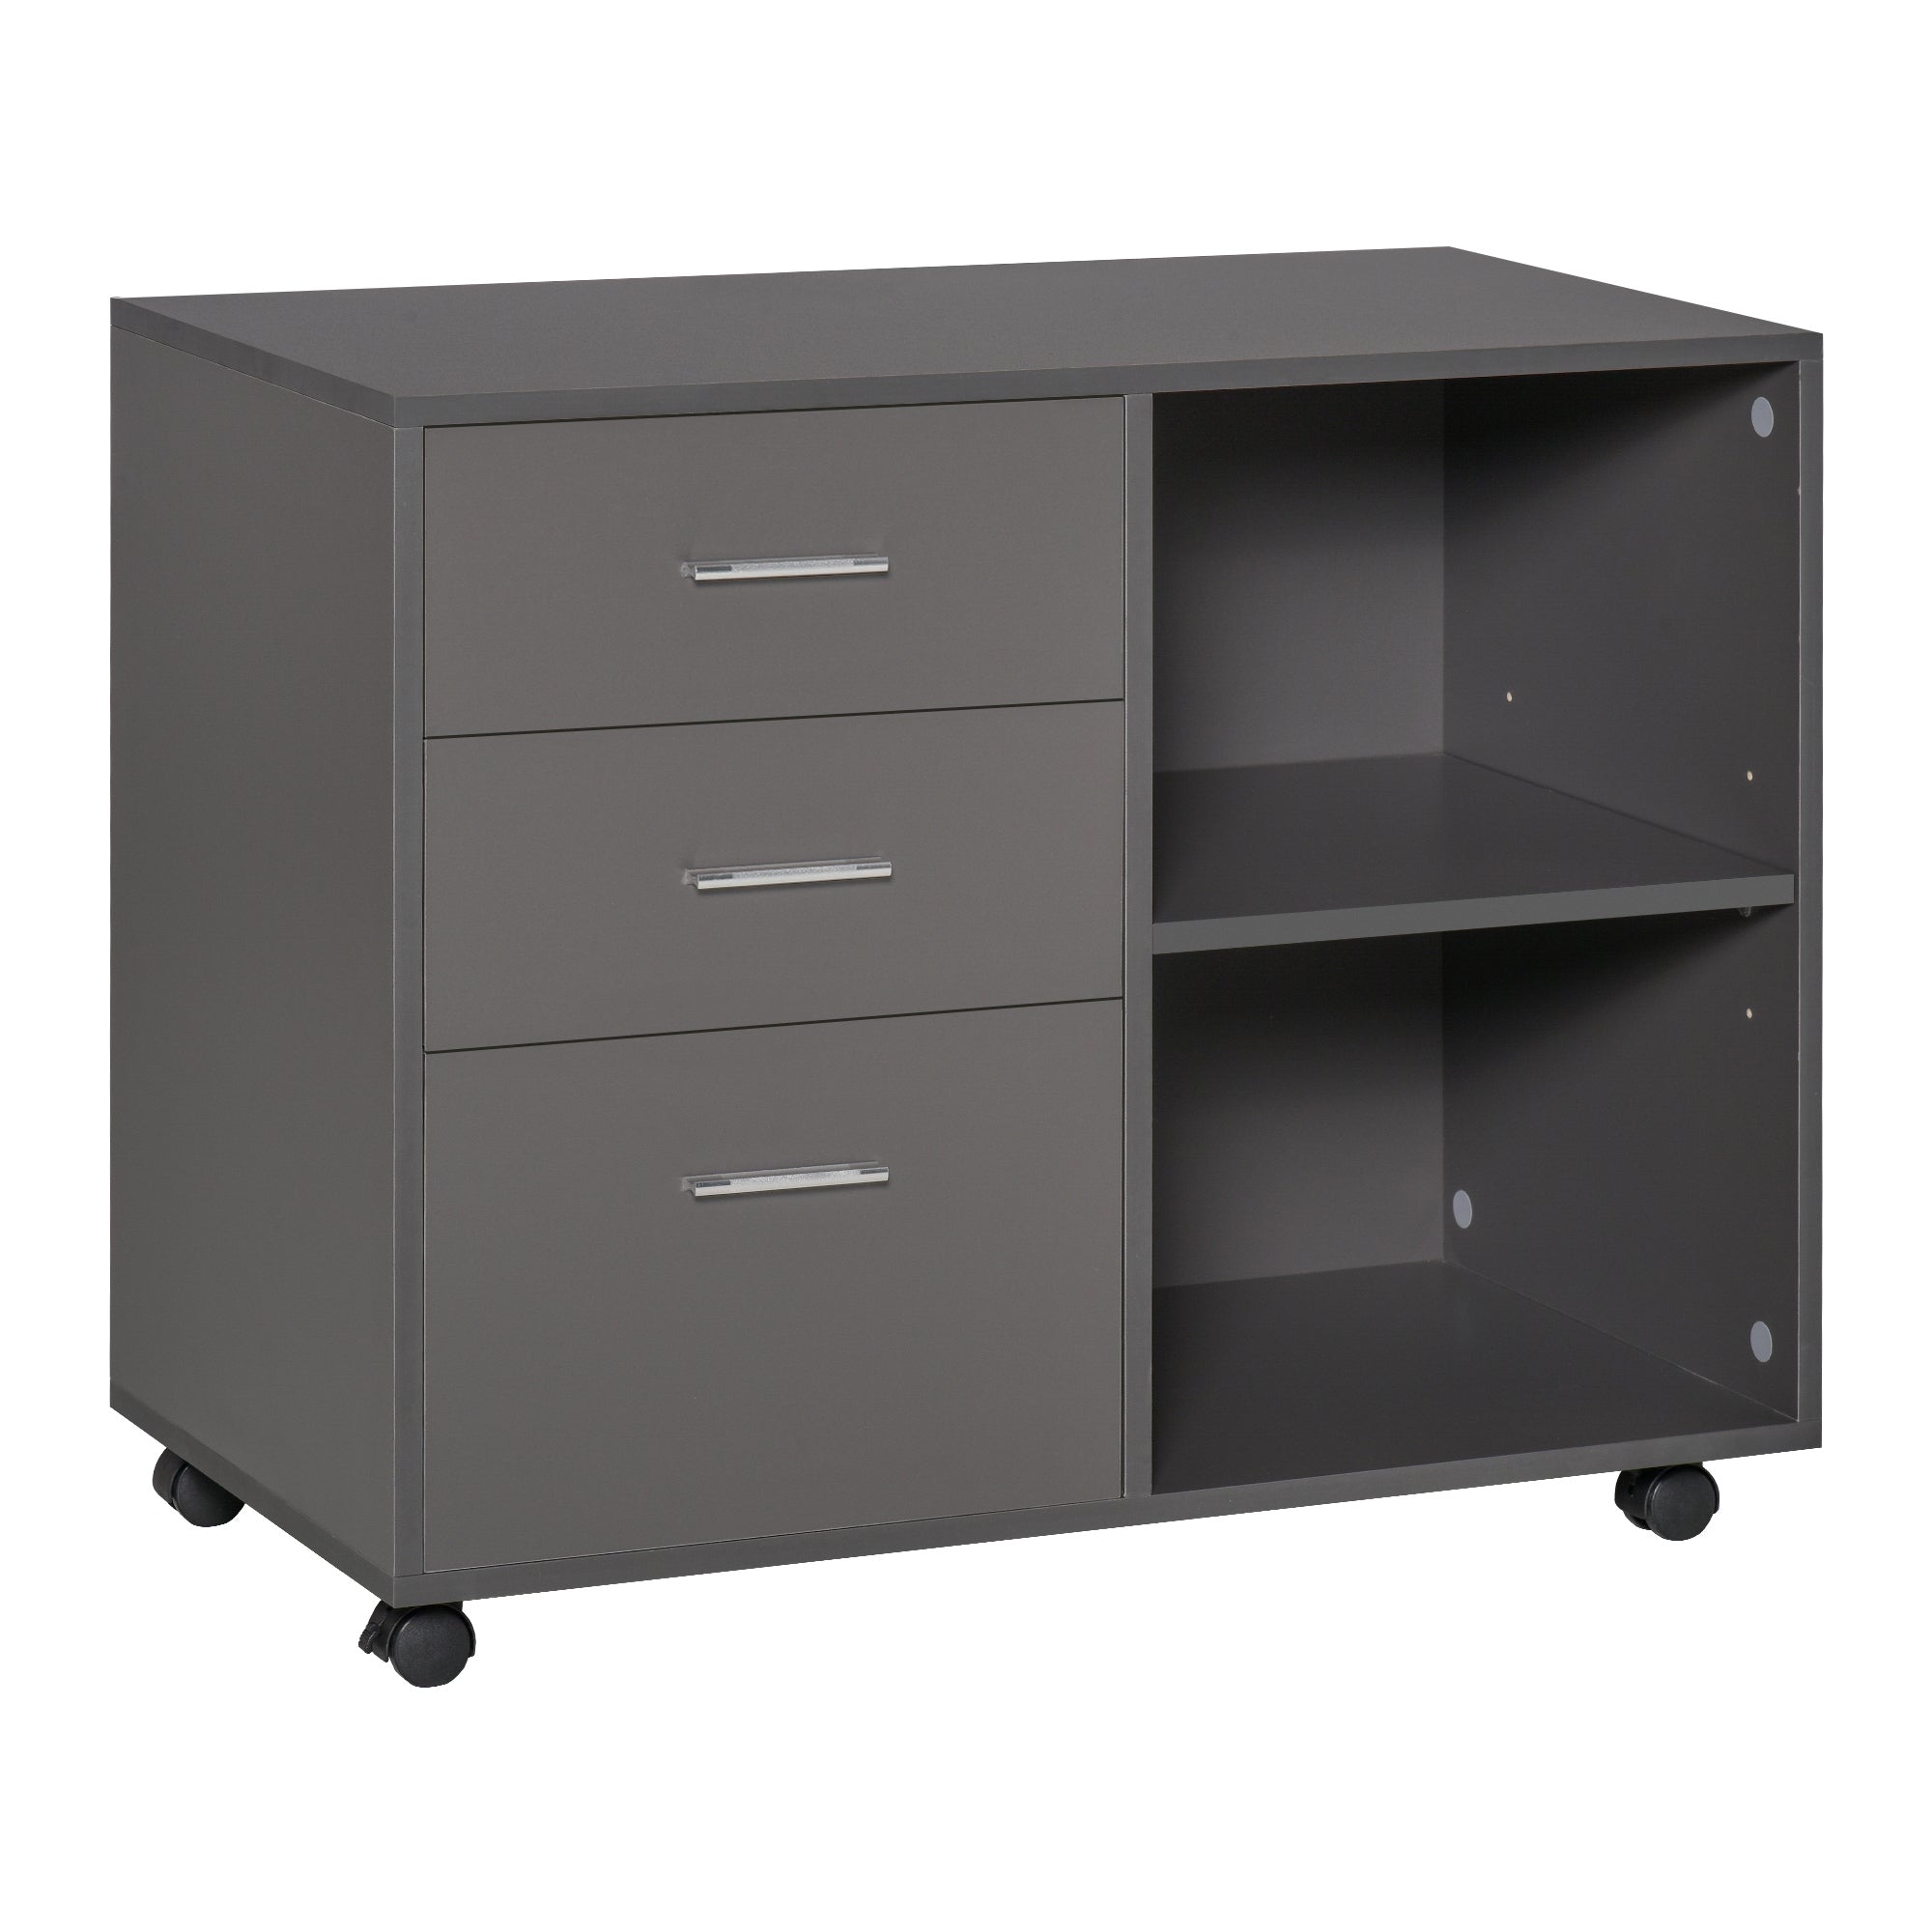 Freestanding Printer Stand Unit Office Desk Side Mobile Storage w/ Wheels 3 Drawers, 2 Open Shelves Modern Style 80L x 40W x 65H cm - Grey-0